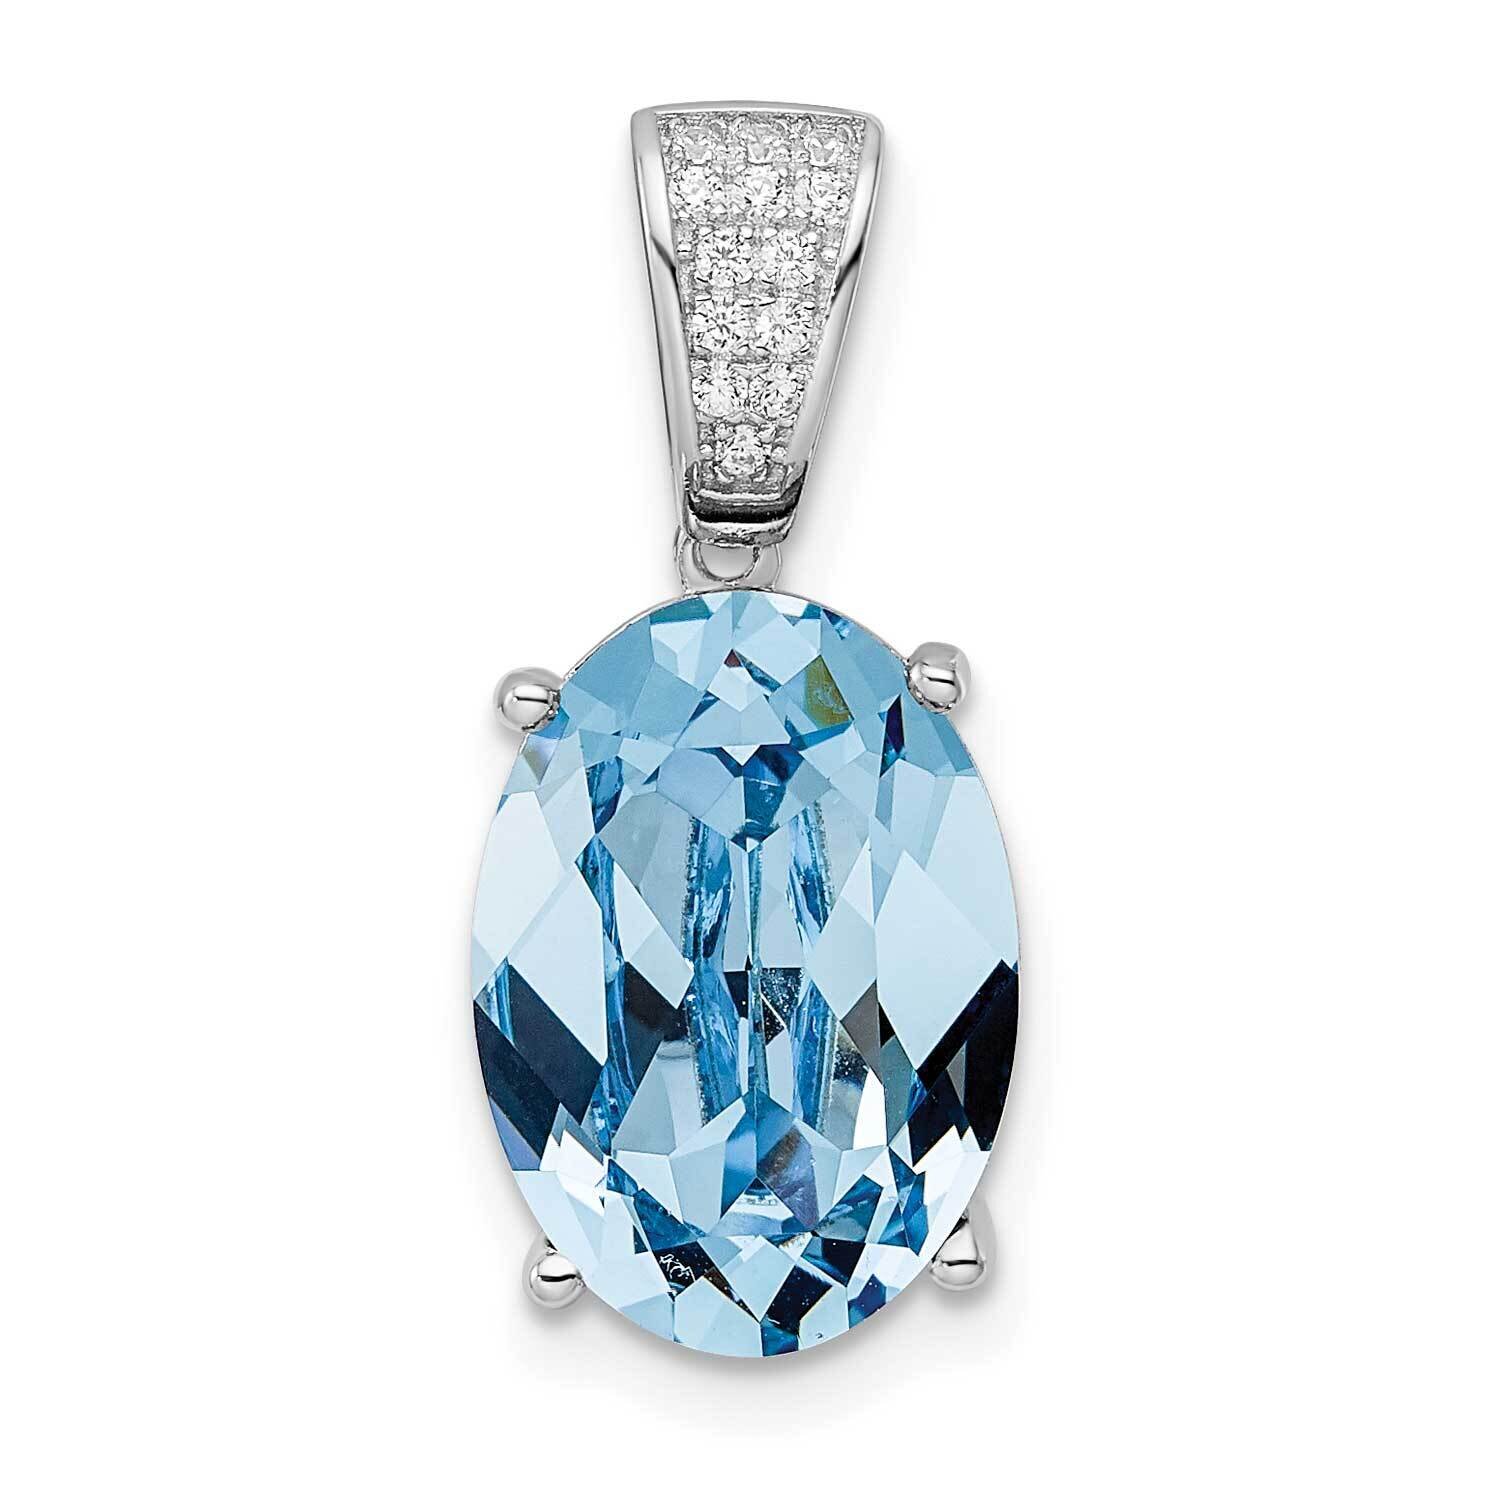 CZ Diamond & Blue Swarovski Crystal Pendant Sterling Silver Rhodium-Plated Polished QP5485